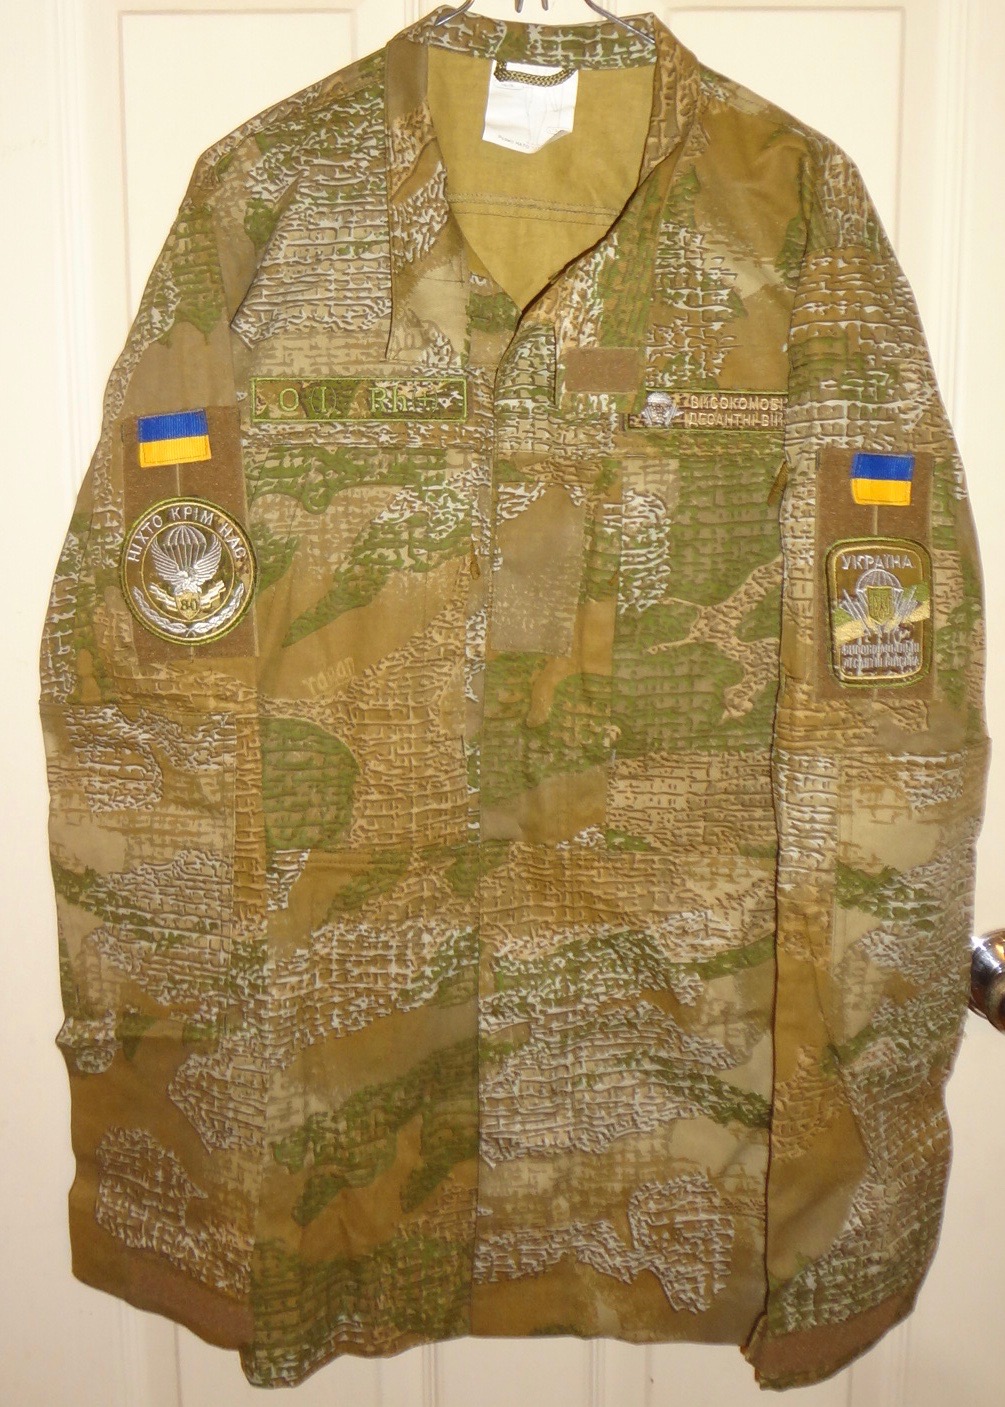 Modern Ukrainian uniform in photographs - Page 2 Dsc00811